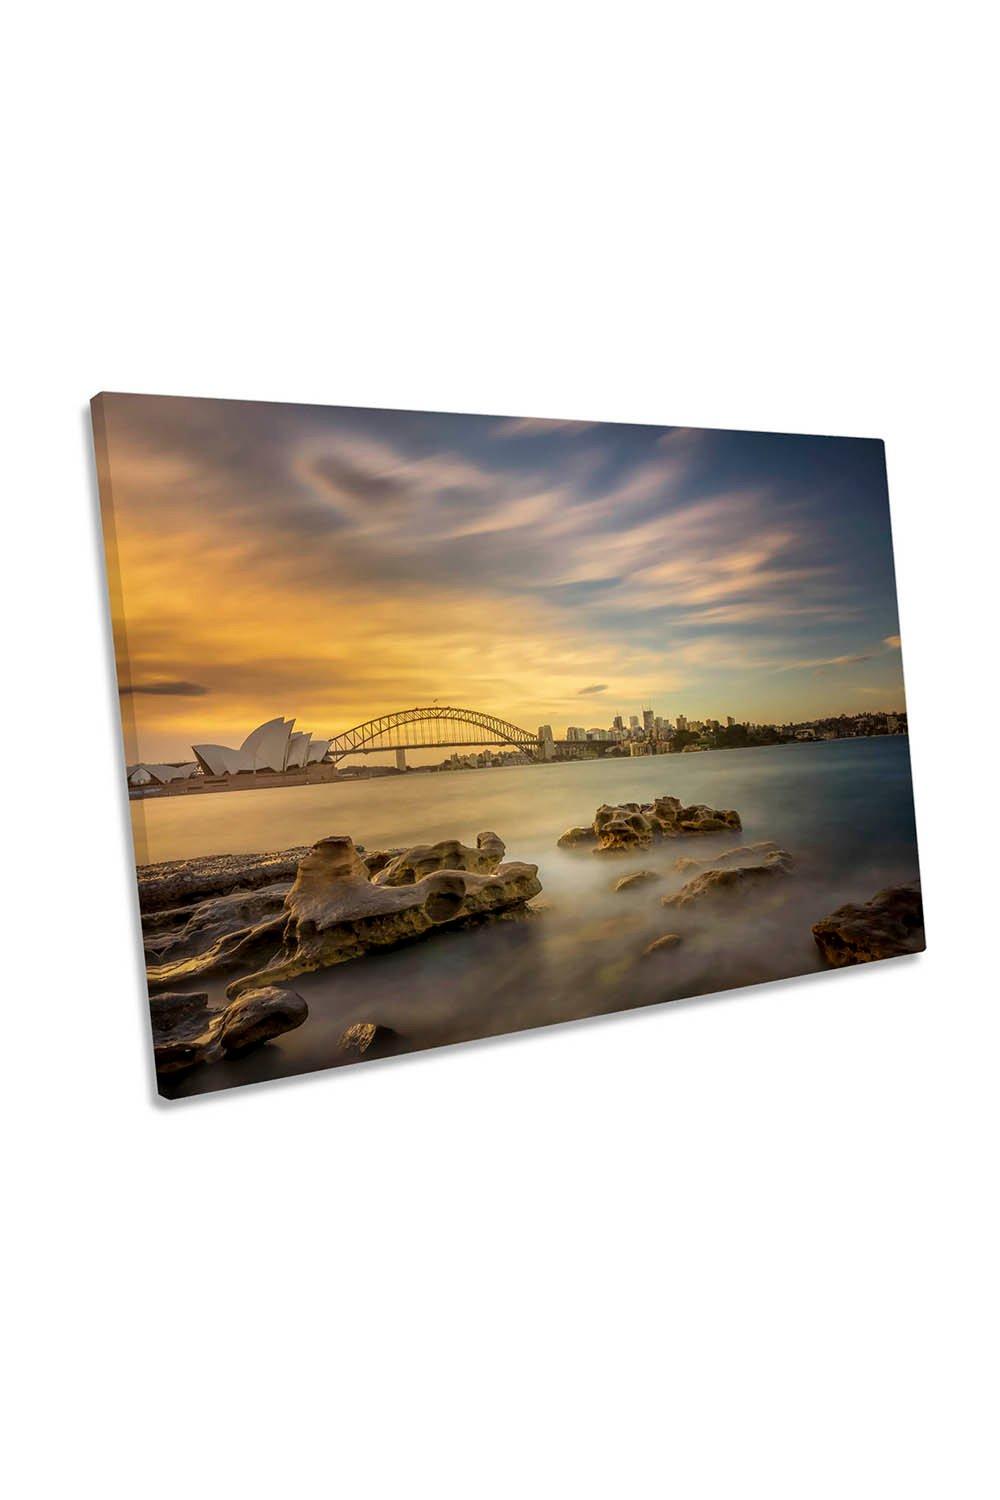 Sydney Opera House Sunset Australia Canvas Wall Art Picture Print